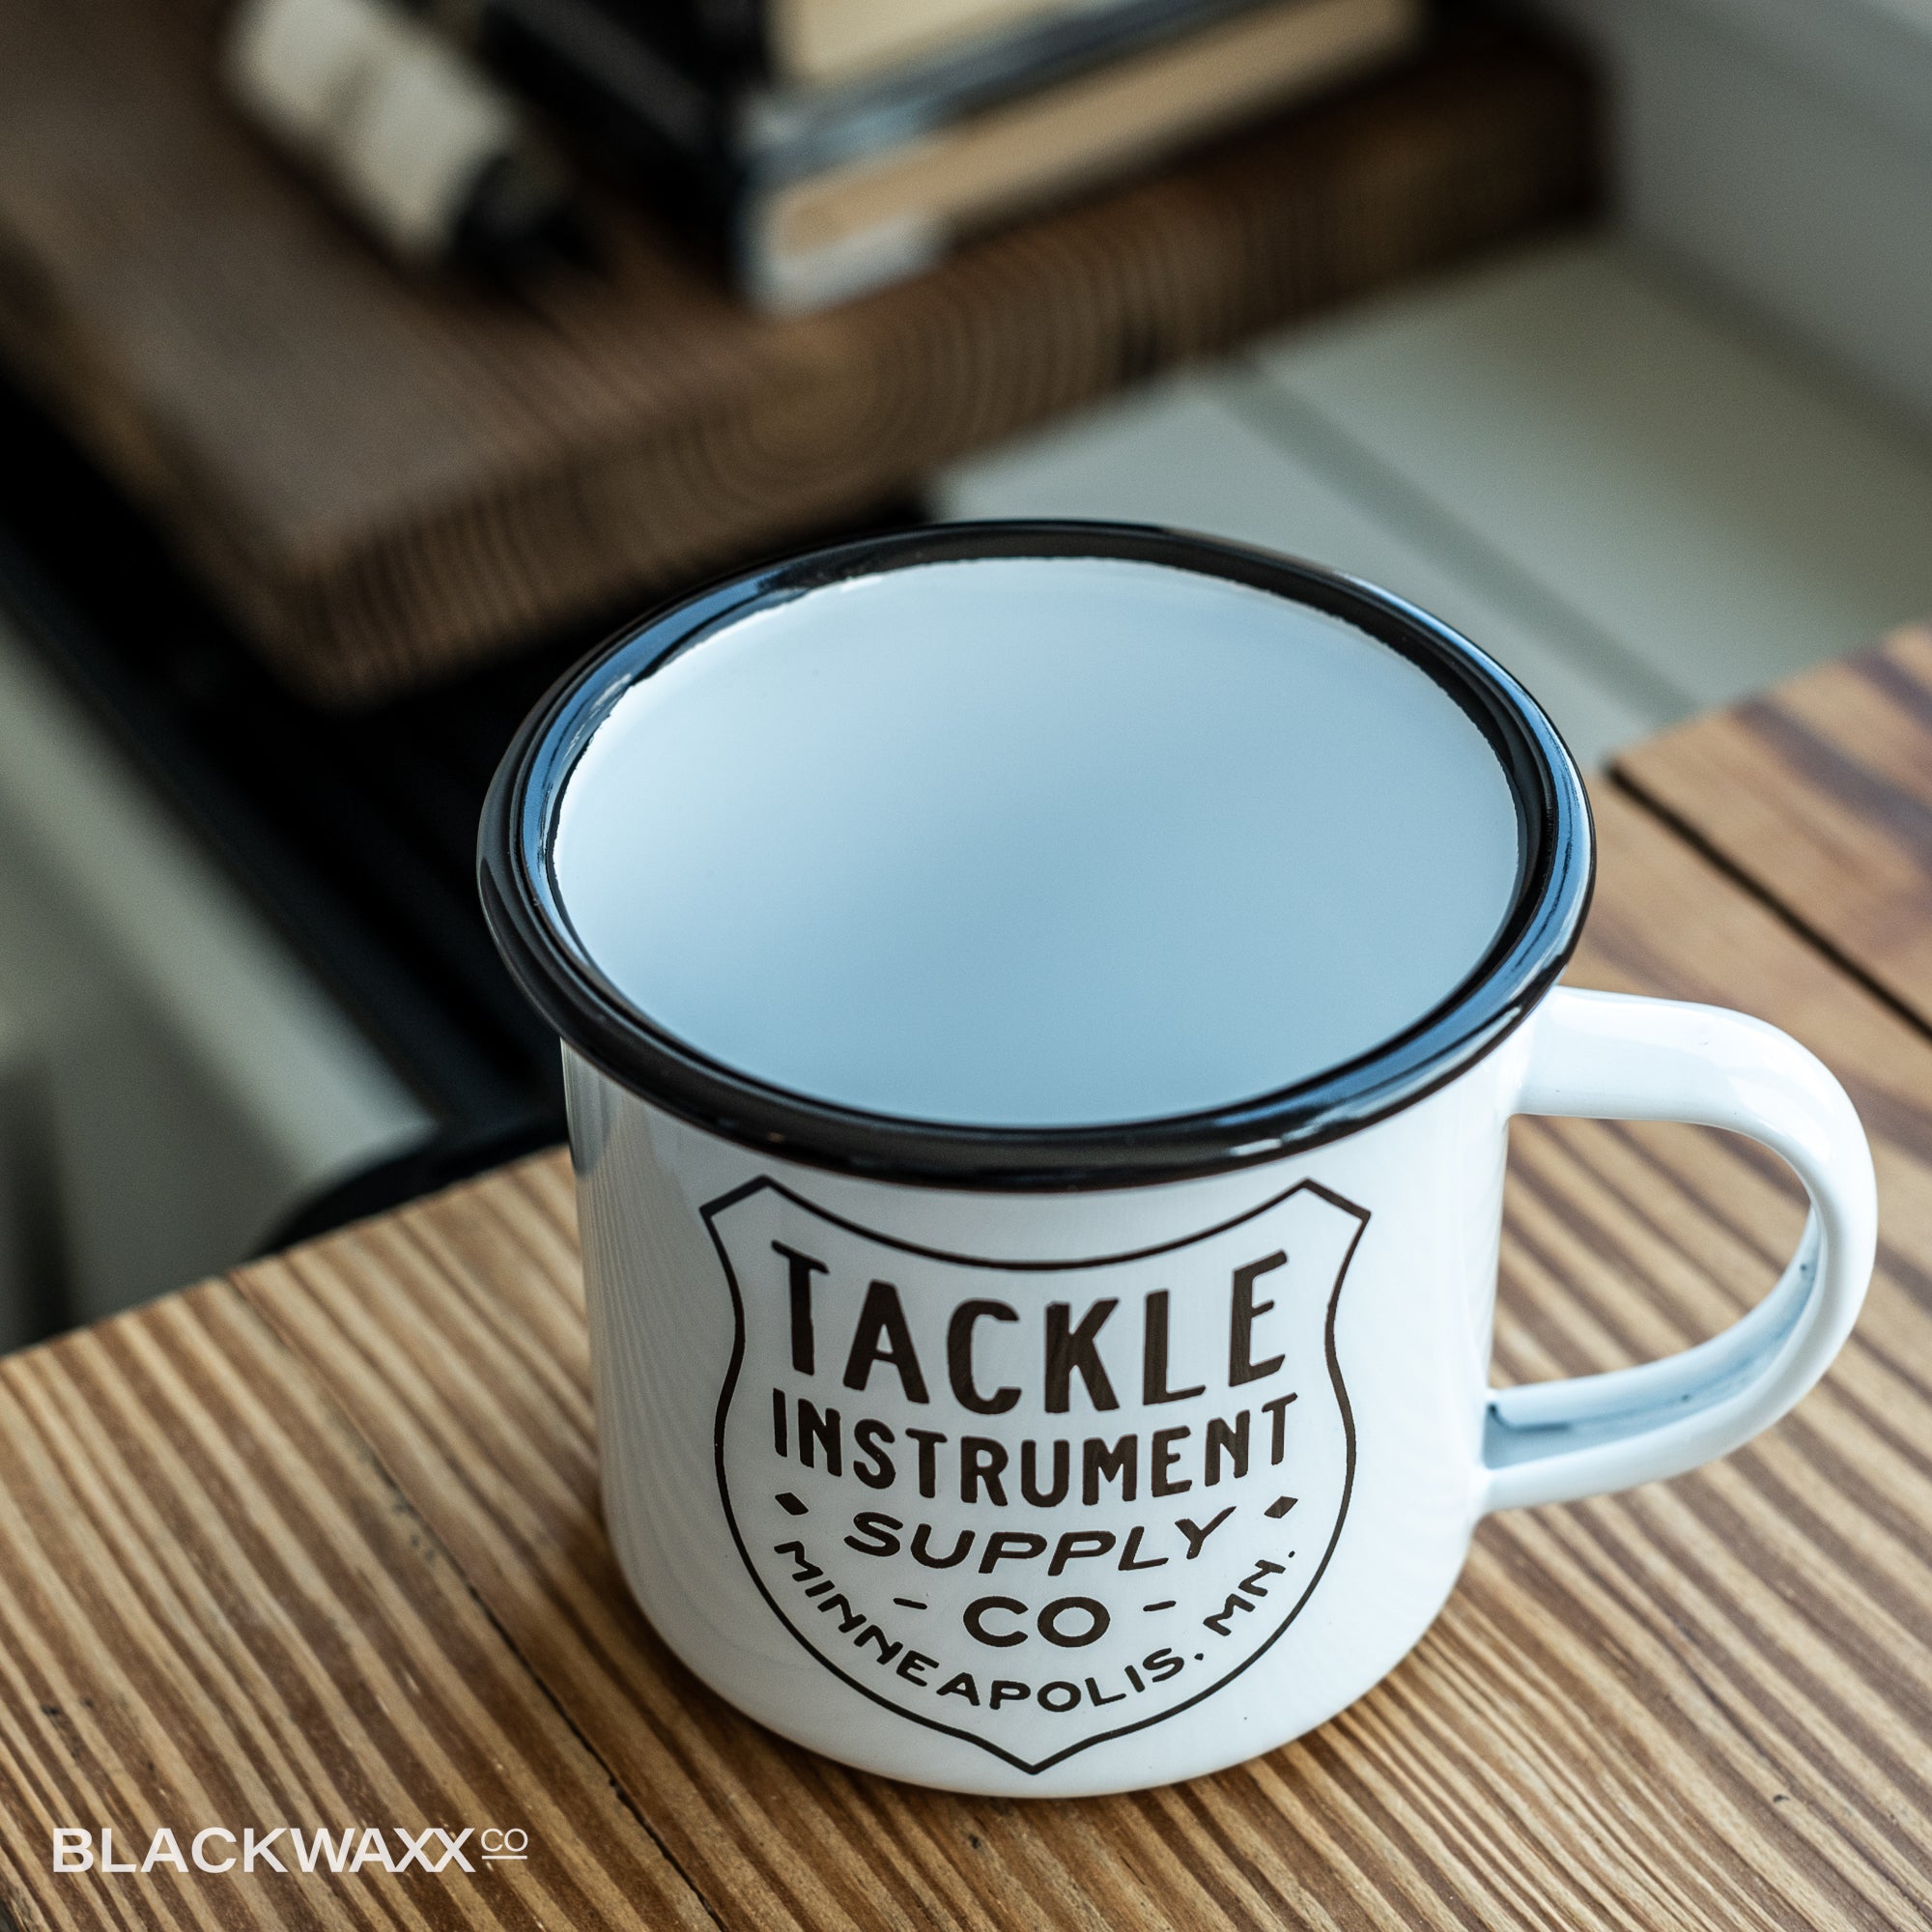 Tackle Instrument - Coffee Mug (metal)